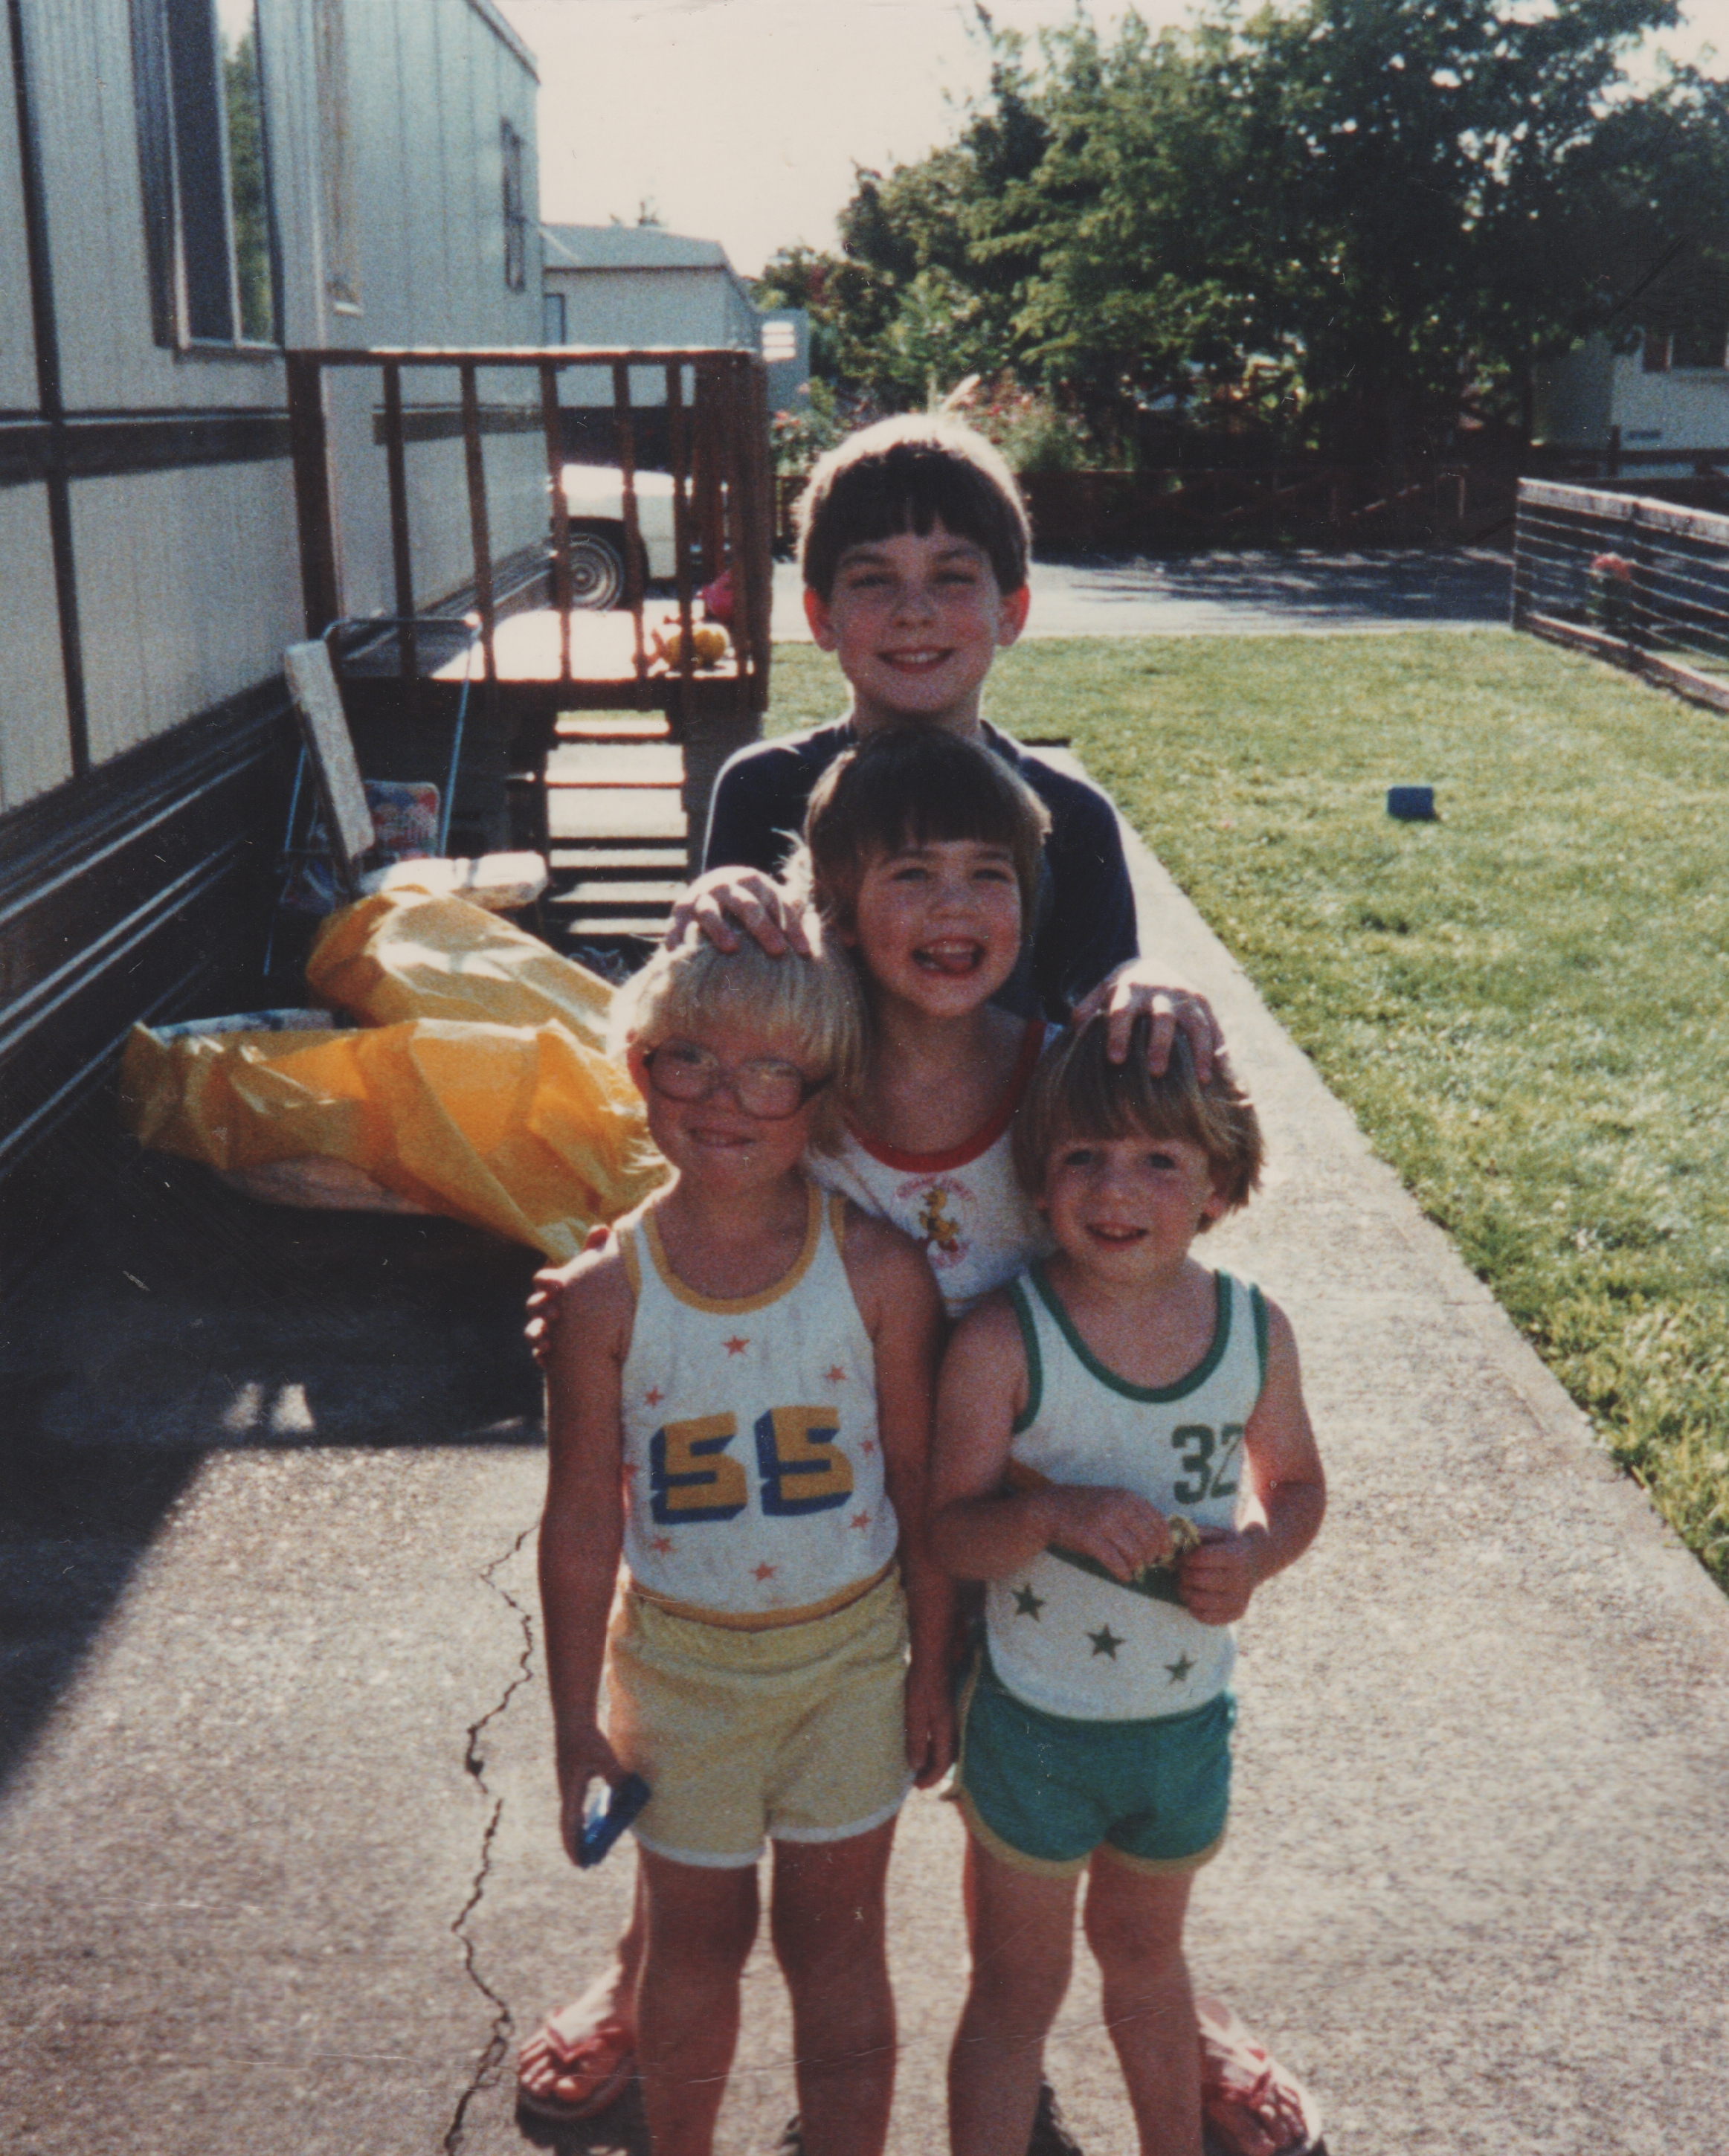 1985-08-16 - Friday - Nathan, Alan, Katie, Rick at our 163 house, front yard.jpg